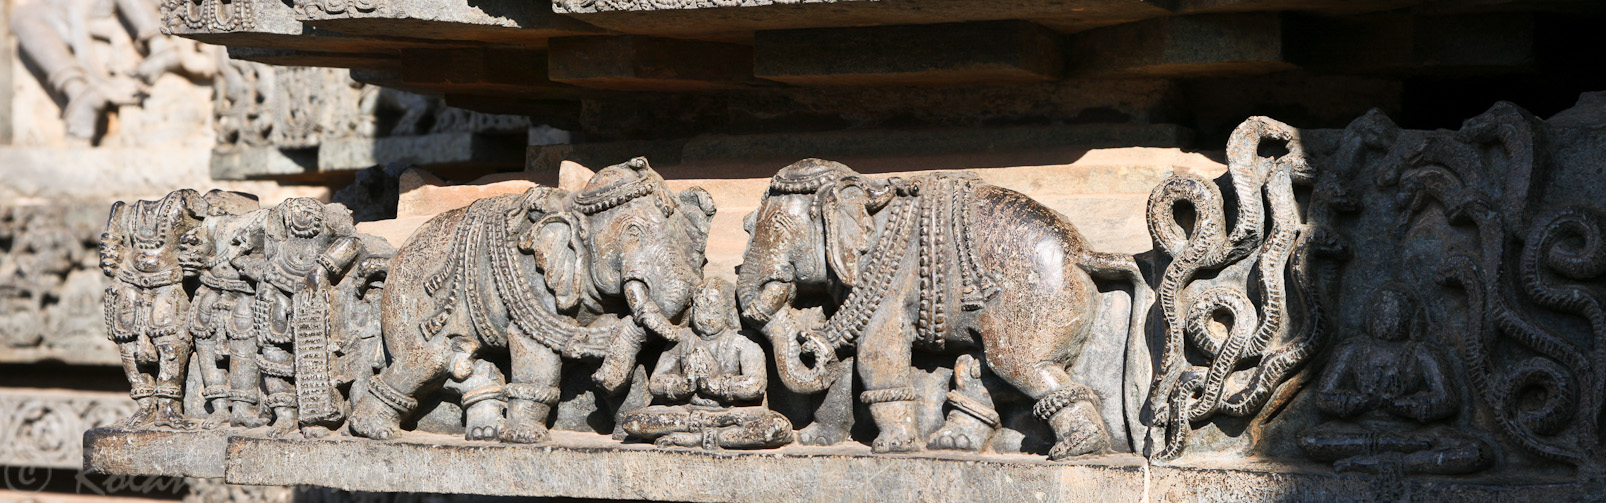 Halebid, temple de Hoysaleswara: Aperçu de l'épopée du Mahabharata